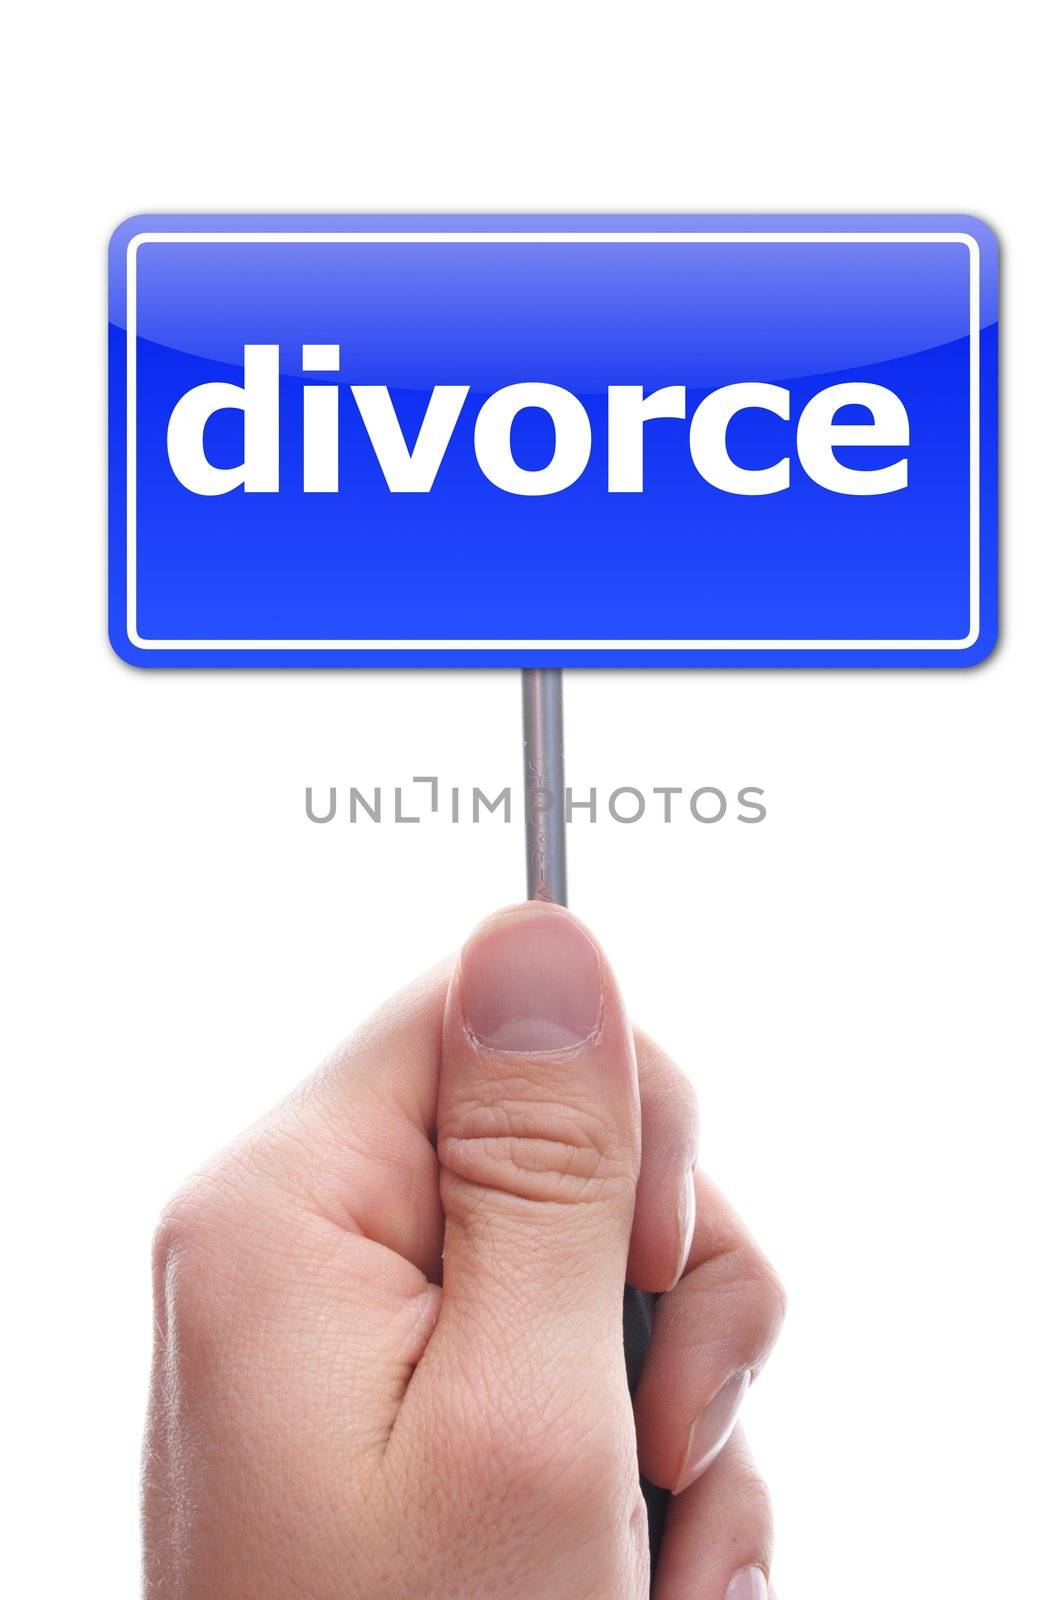 divorce by gunnar3000